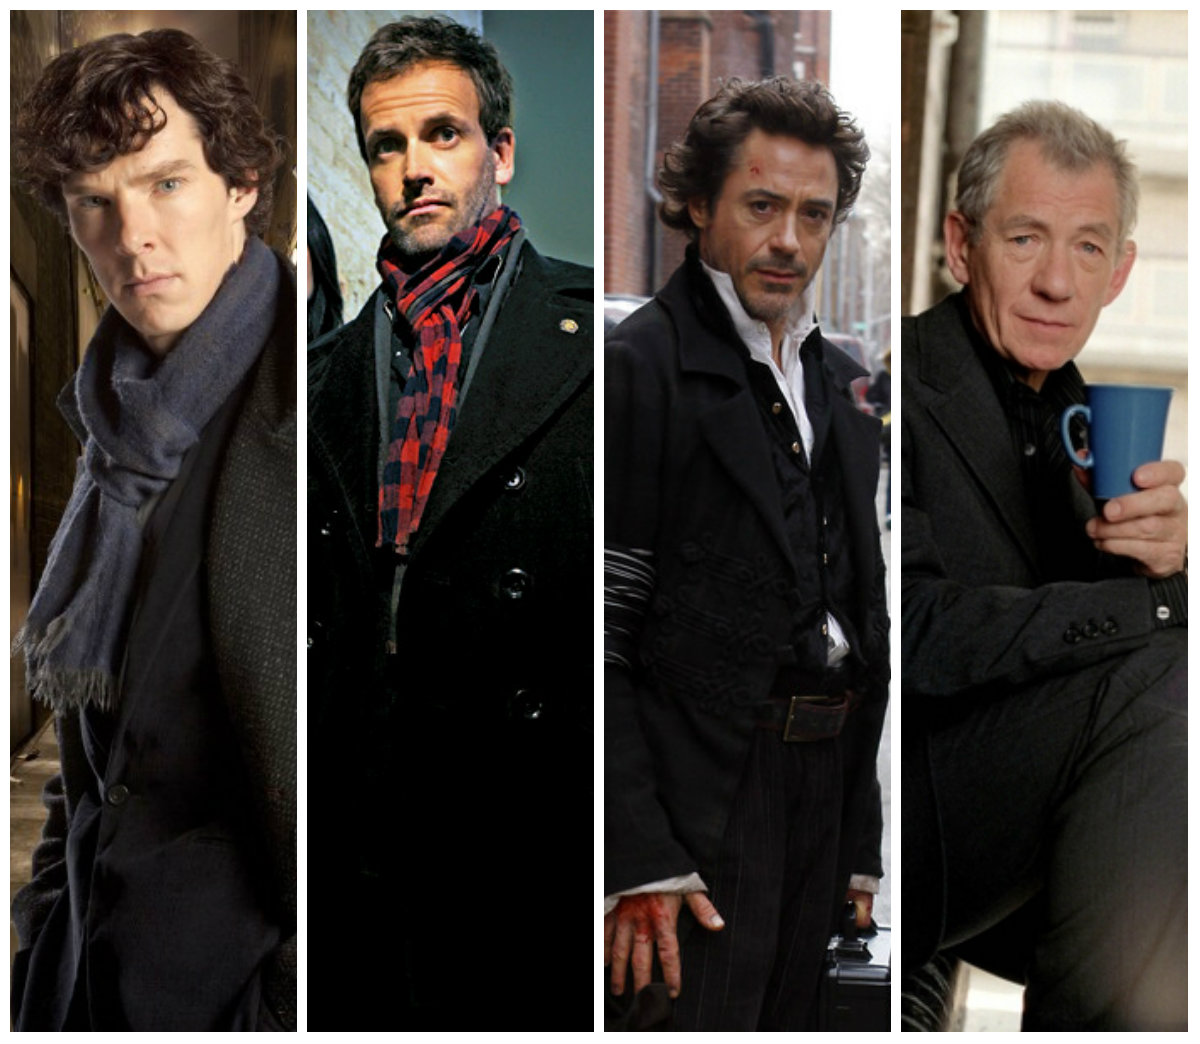 Tutti i recenti Sherlock Holmes. Da sinistra: benedict cumberbatch (Sherlock - BBC), Jonny Lee Miller (Elementary - CBS), Robert Downey Jr (Sherlock Holmes - Guy Ritchie), Ian McKellen (Mr Holmes)